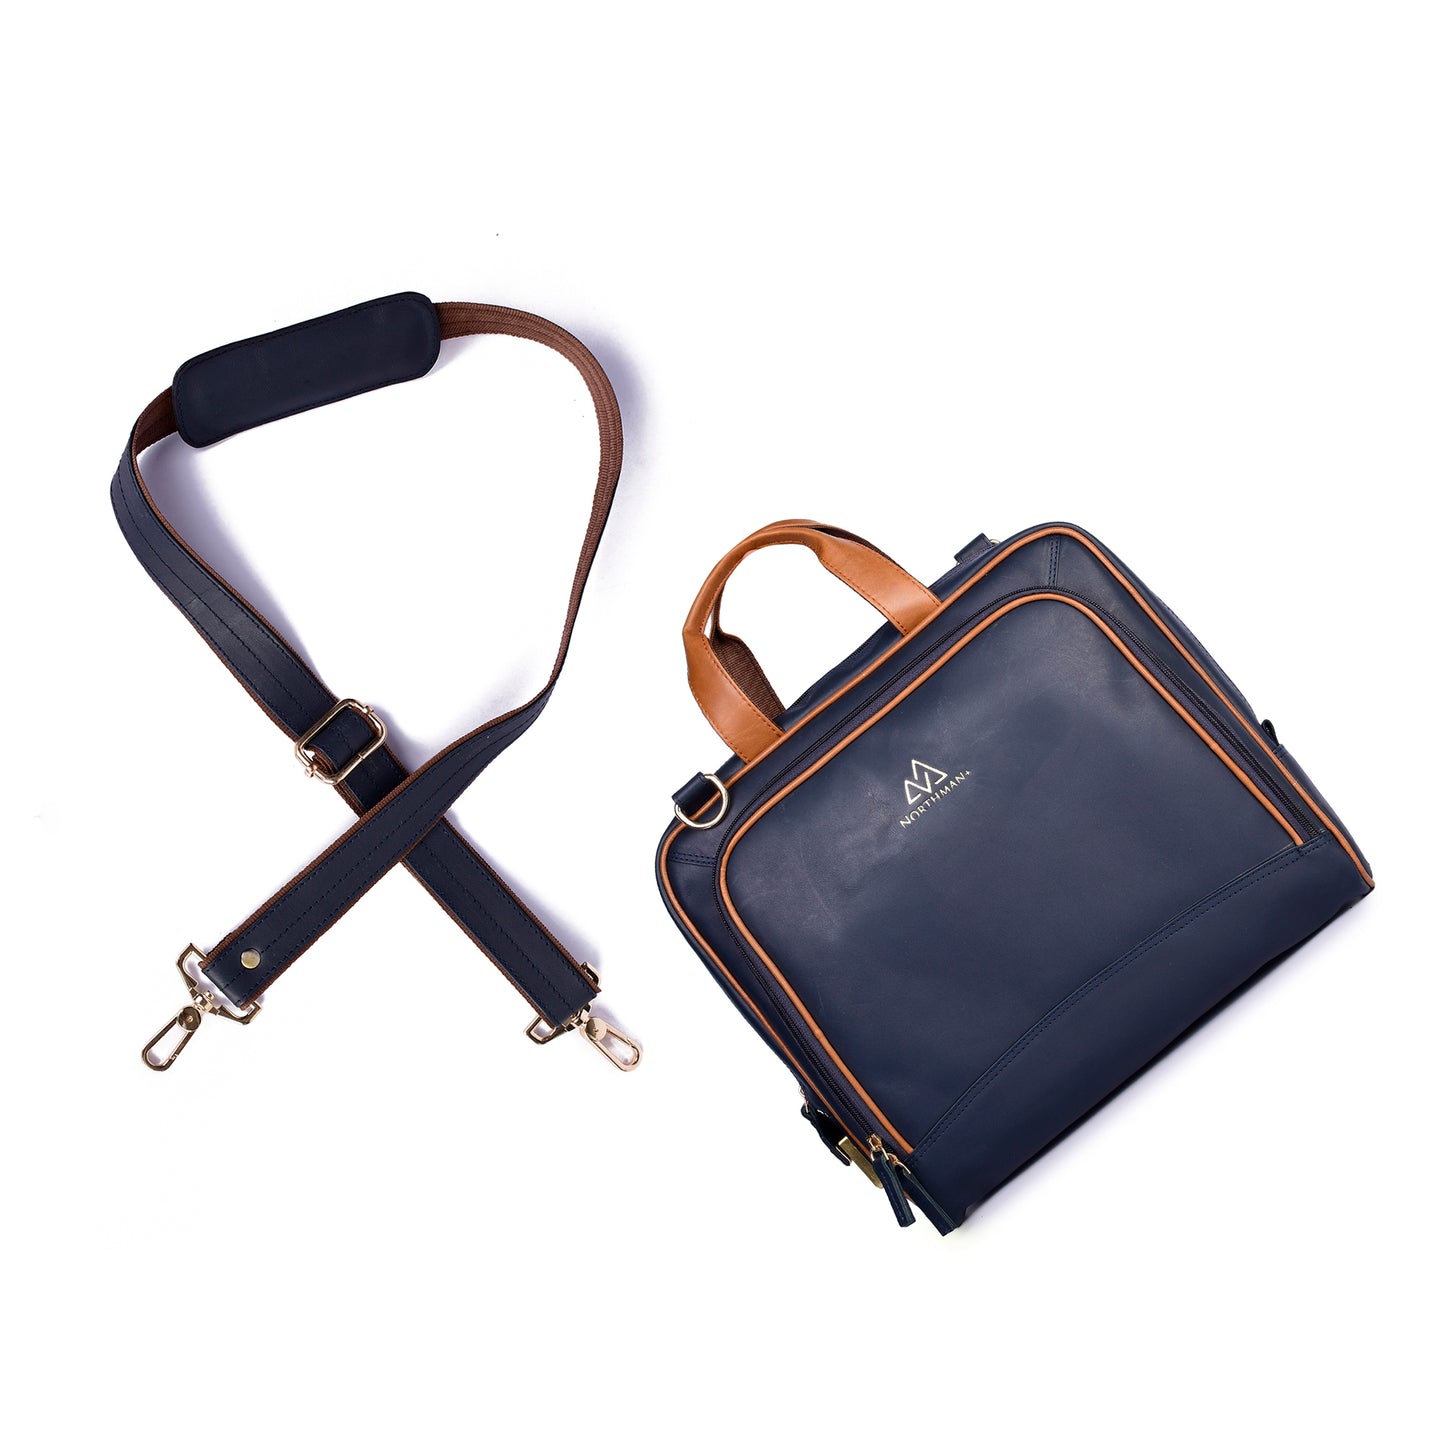 Leather Laptop Messenger Bag  : The CEO Bag